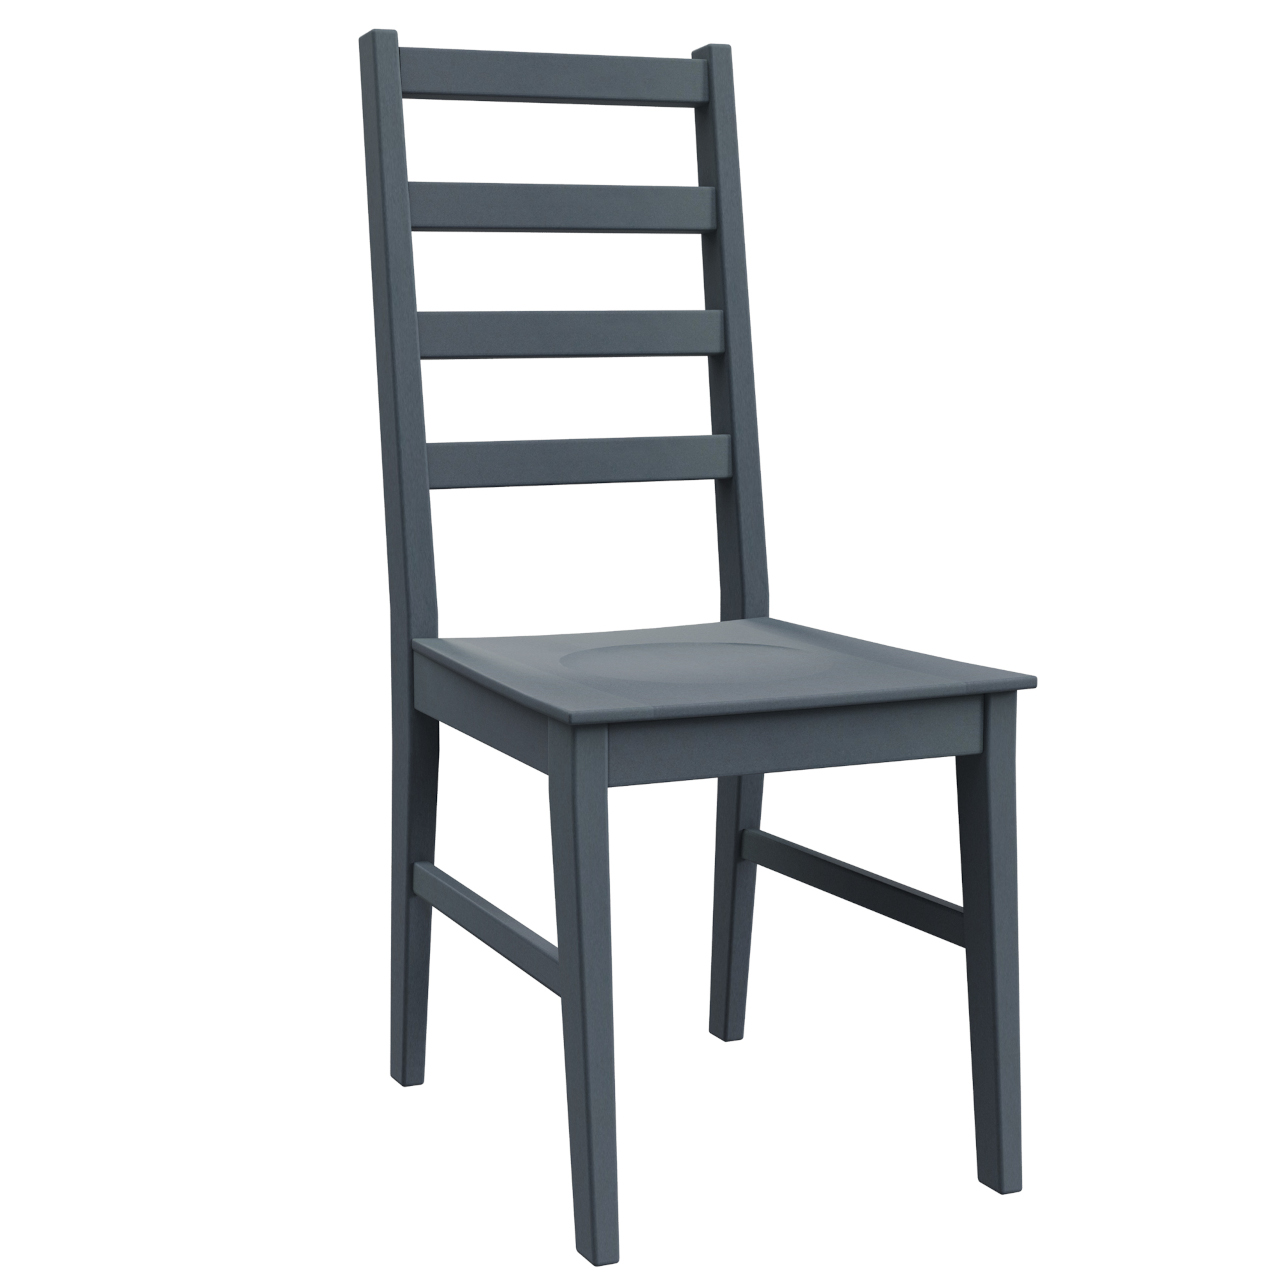 Chair NILO 8D graphite